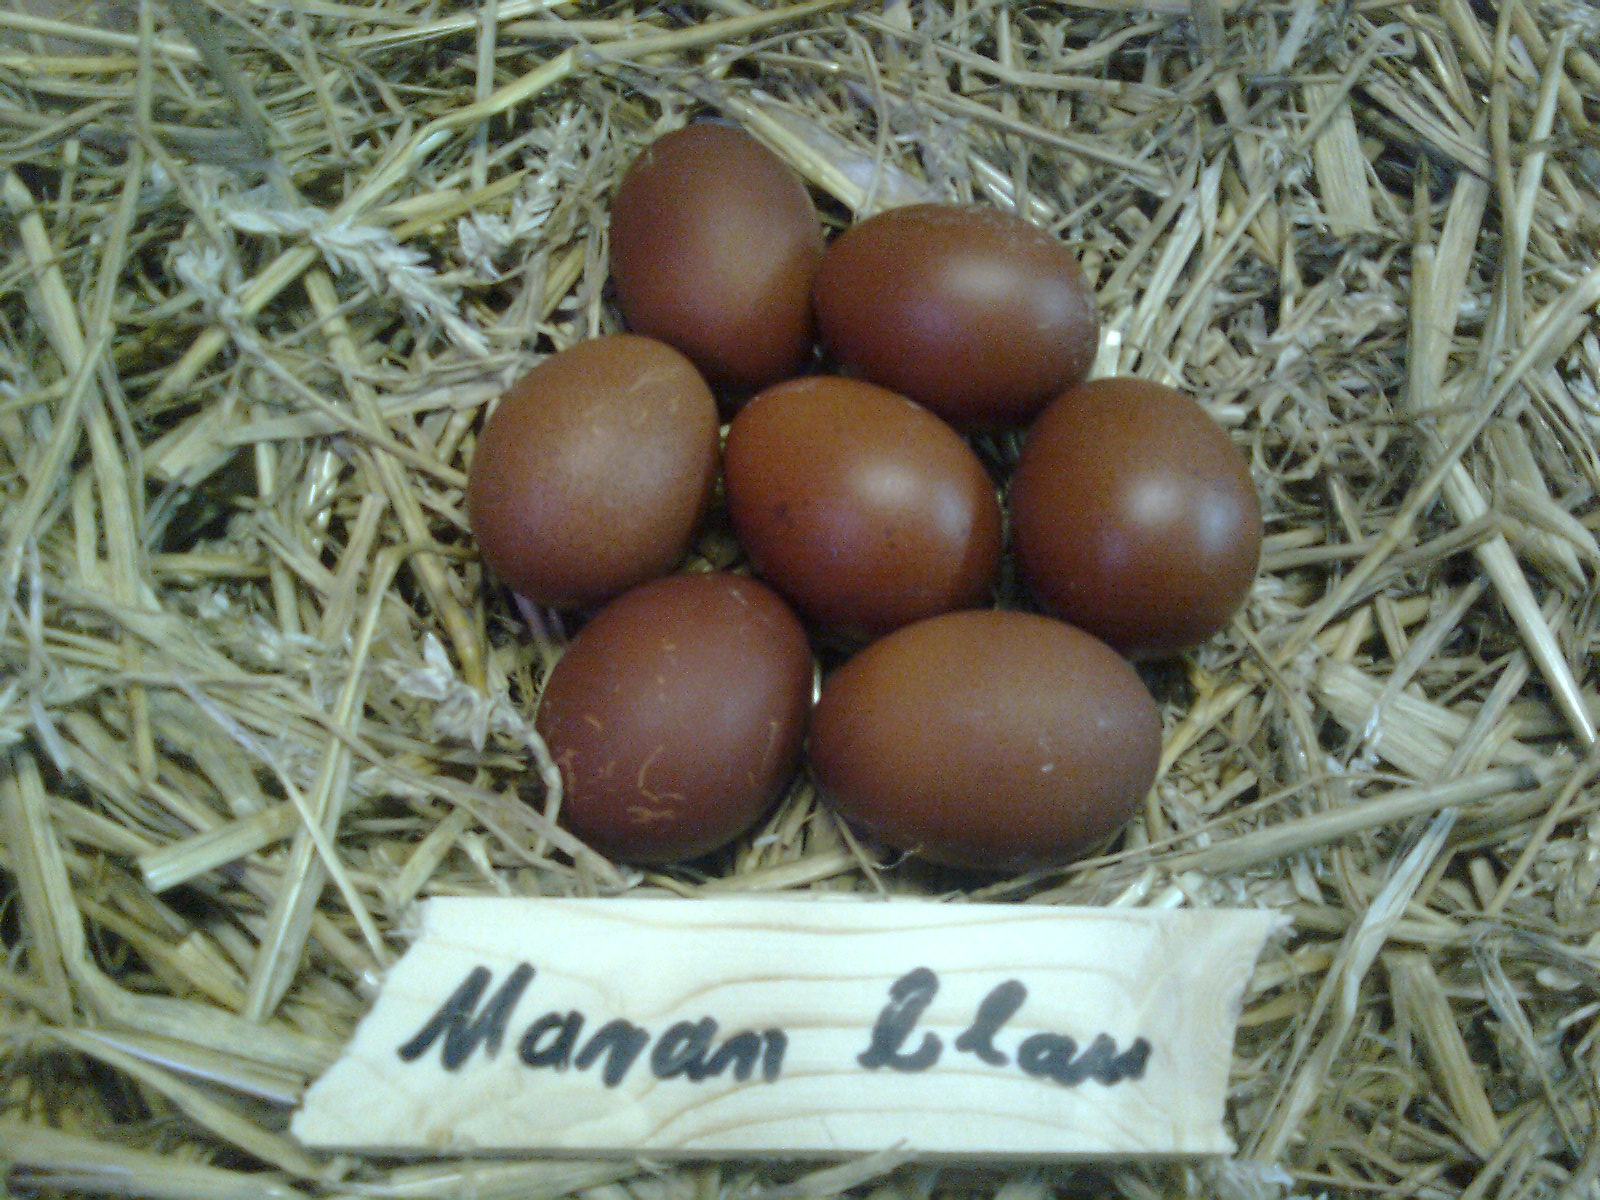 Maran blau/silber -Eier ca. 65-75g schwer, Brutdauer ca. 21 Tage